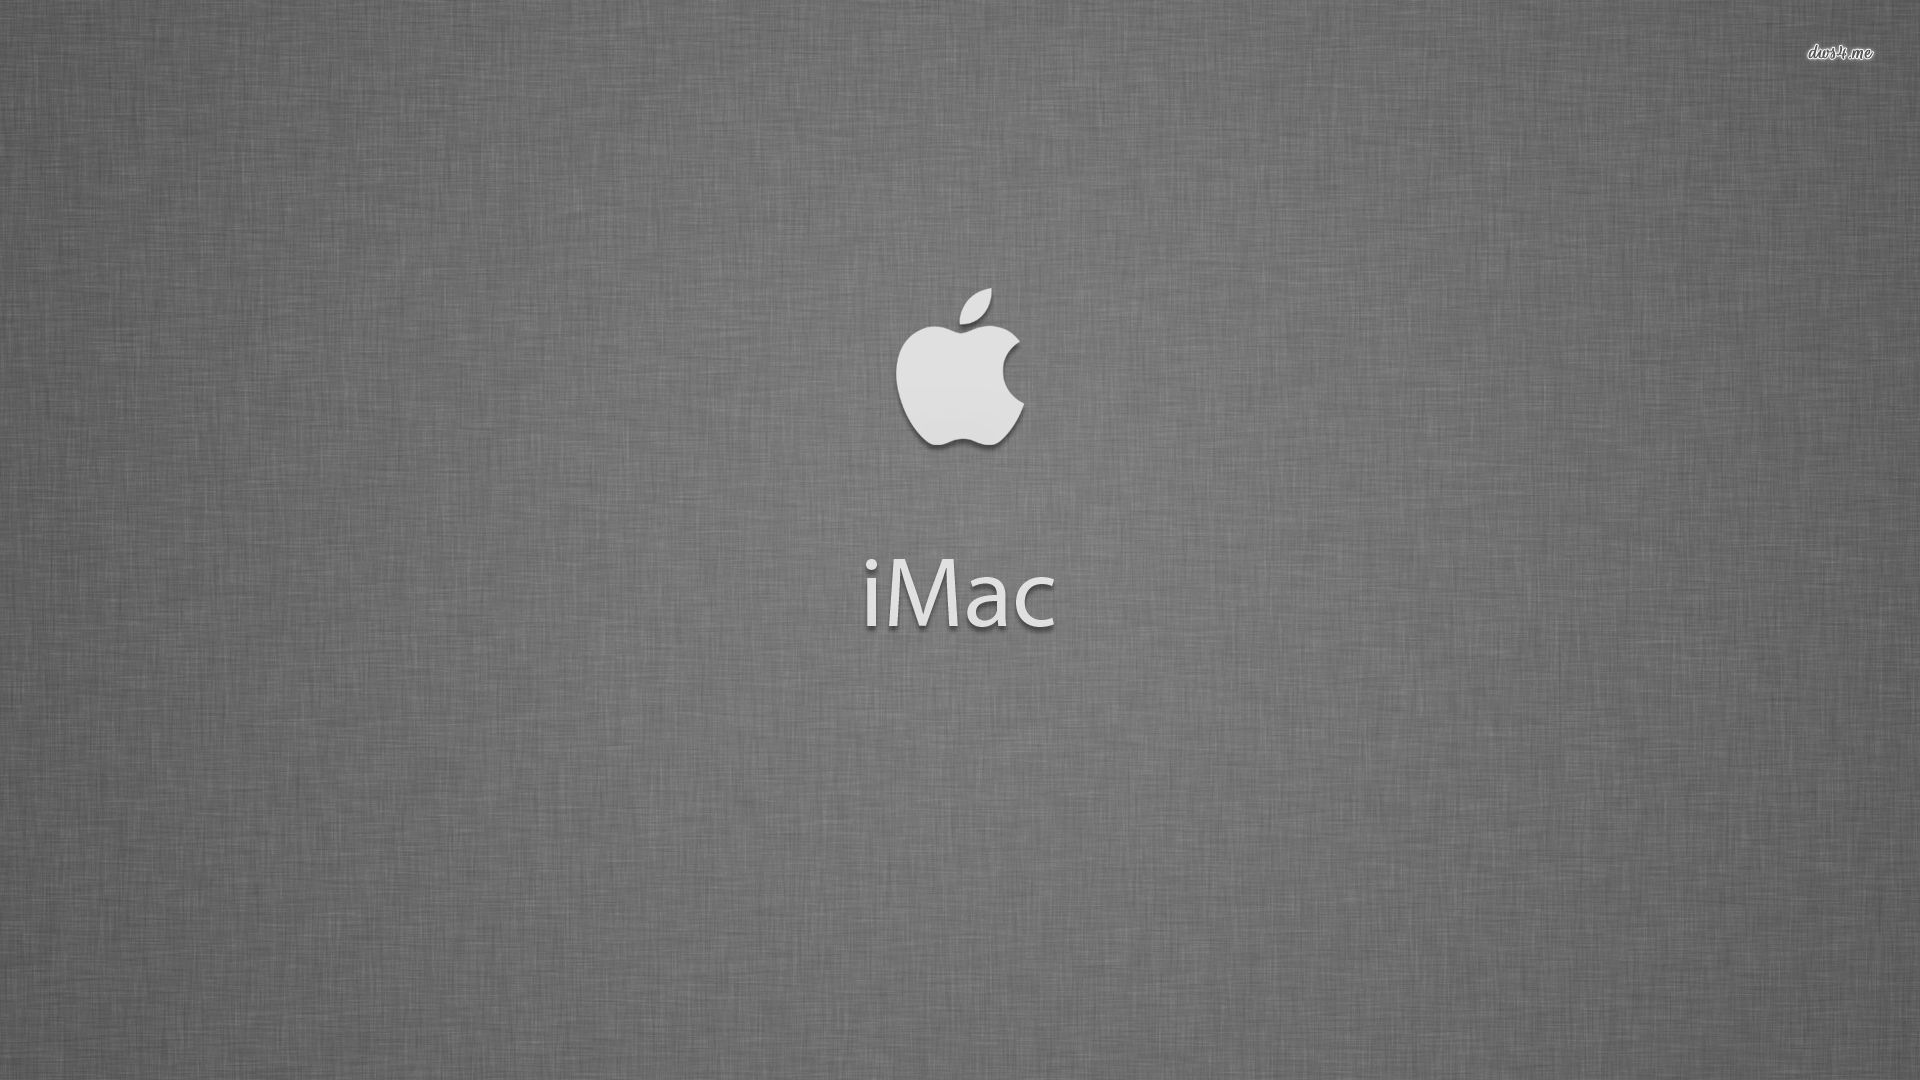 Apple - iMac wallpaper - Computer wallpapers